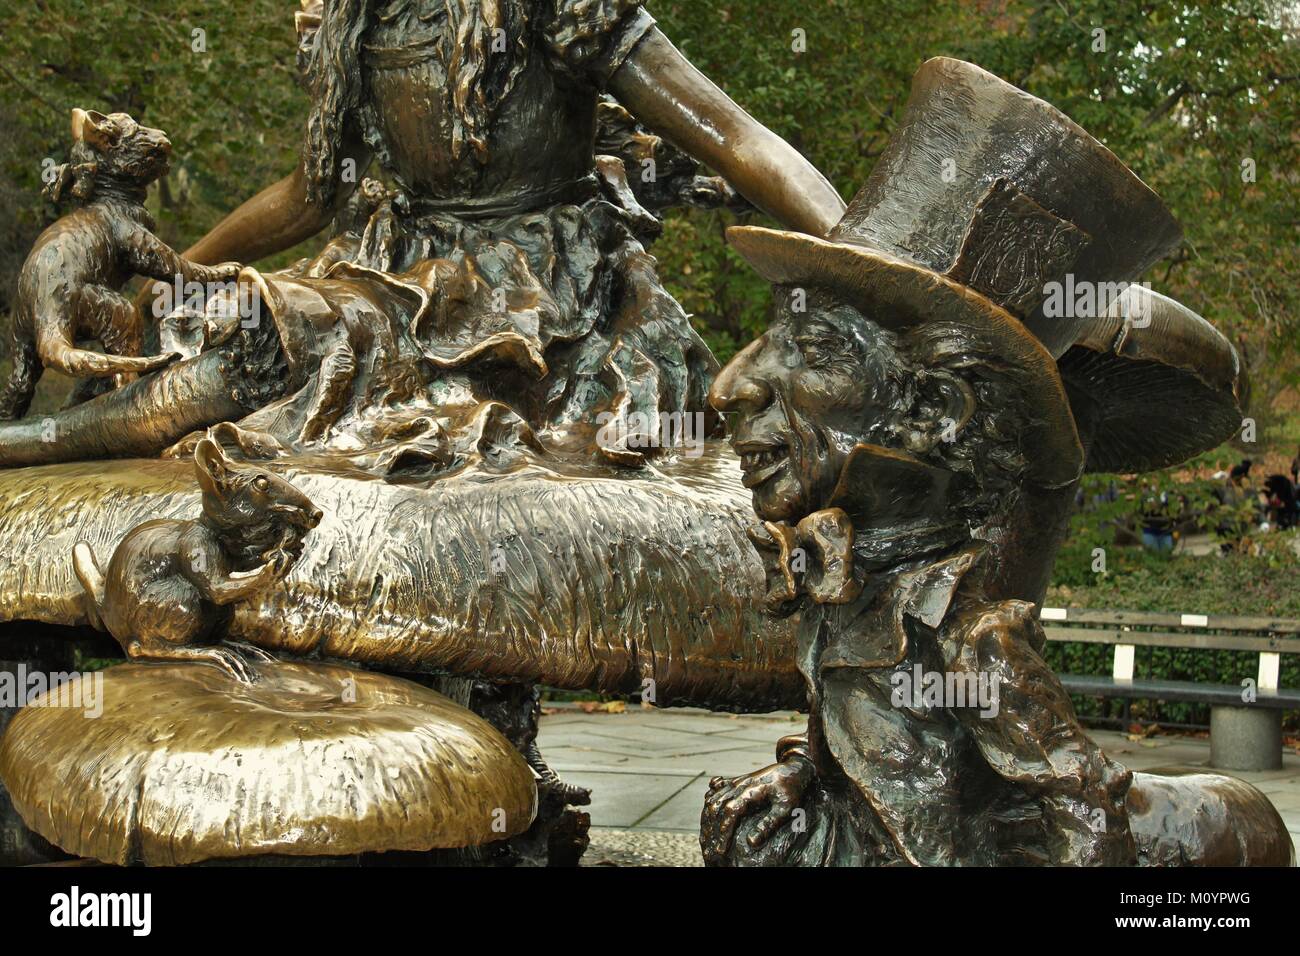 Alice in Wonderland memorial statue for Margarita Delacorte- Bethesda Park, New York City- November 15, 2017. Stock Photo